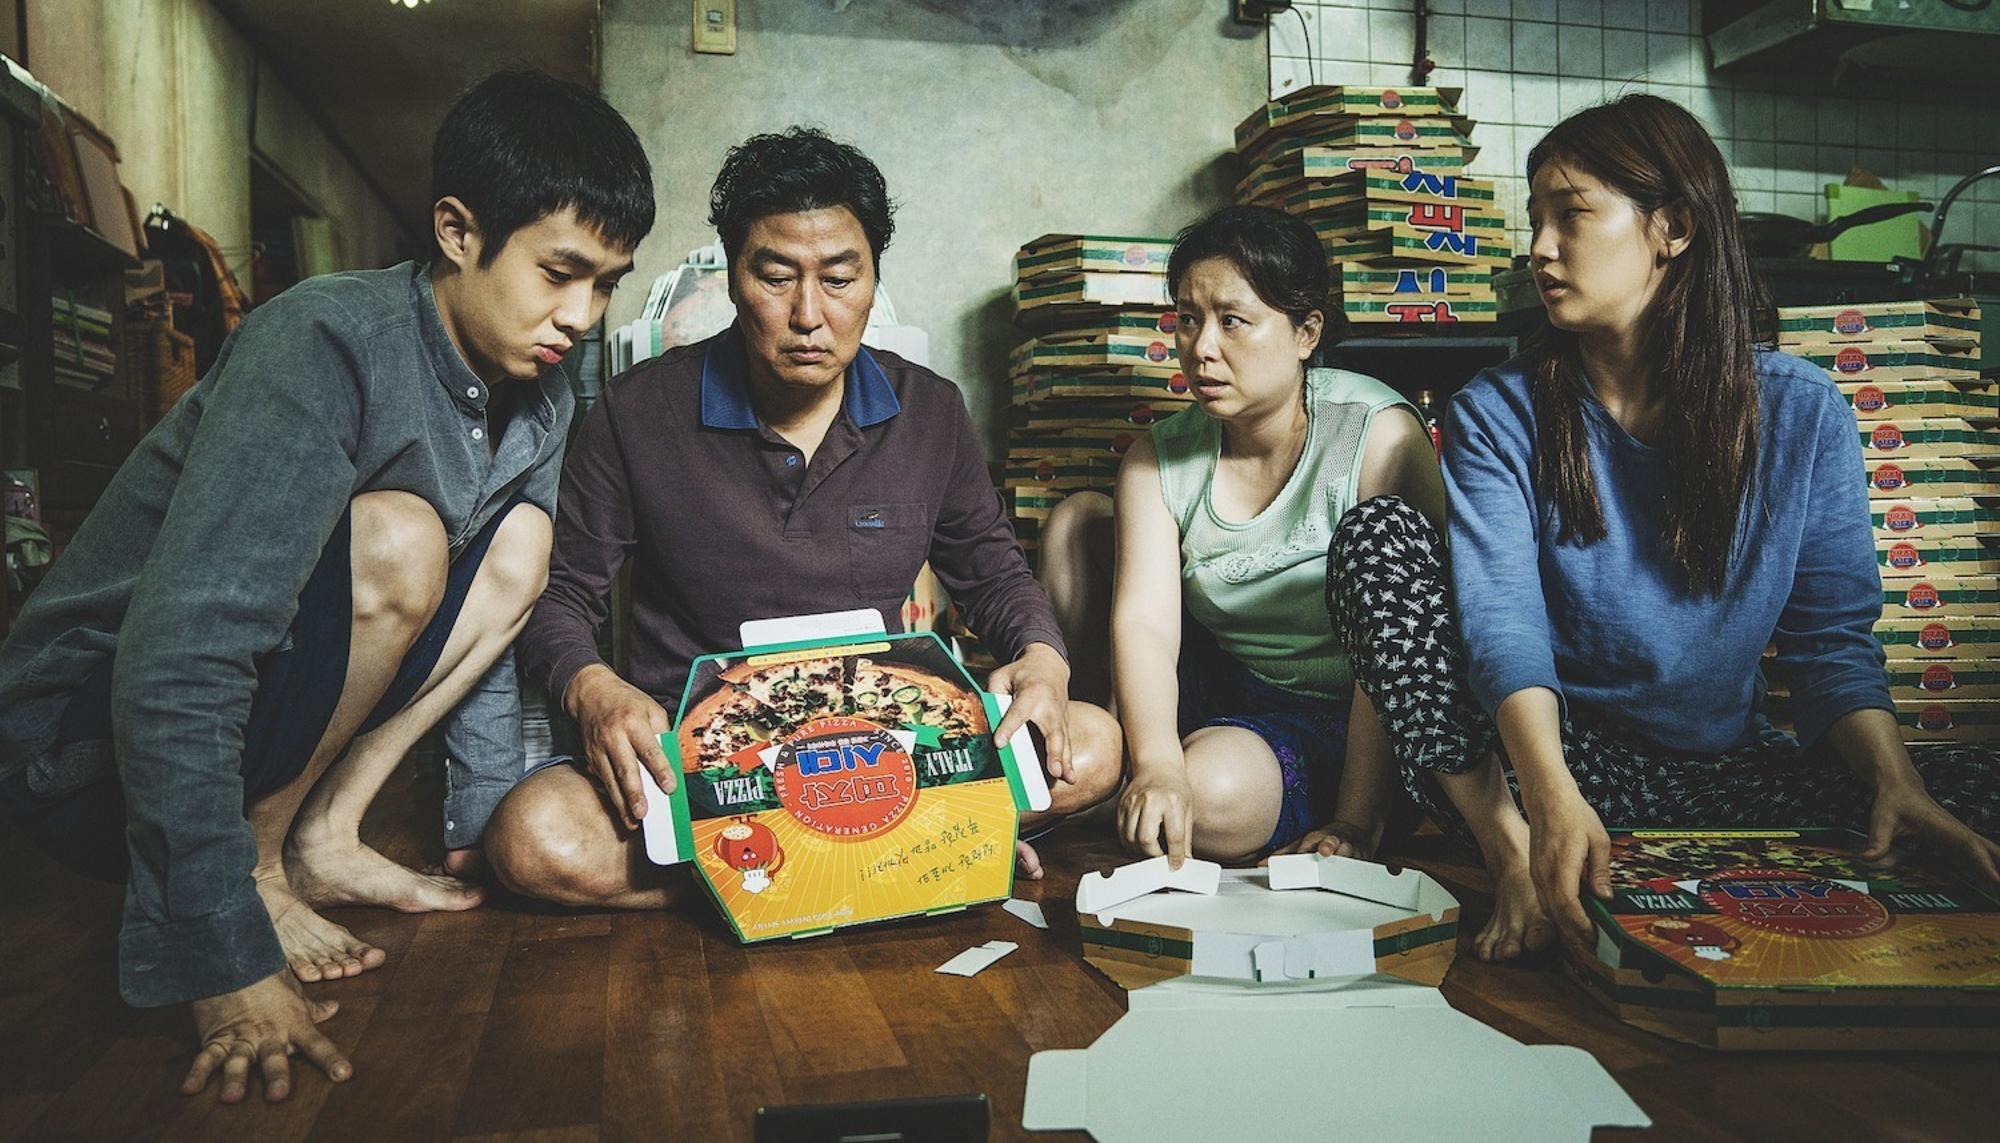 Escena do filme onde a familia está a dobrar as caixas das pizzas. Foto: Distribuidora La Aventura.